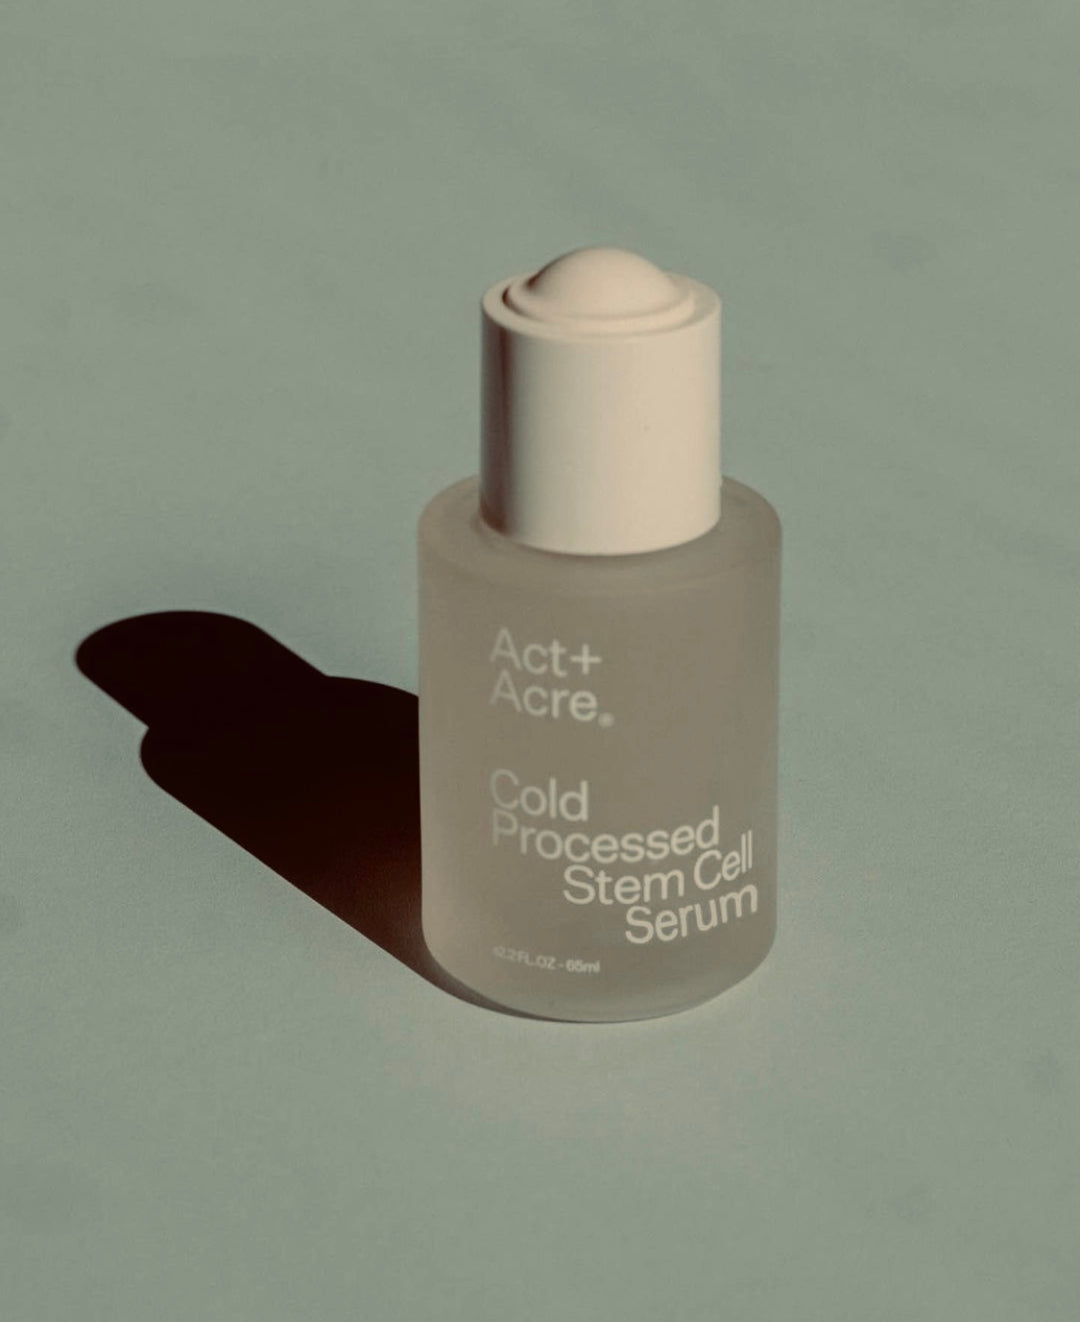 Twentyseven Toronto - Act + Acre Cold Pressed Apple Stem Cell Serum - Full Size (65ml)